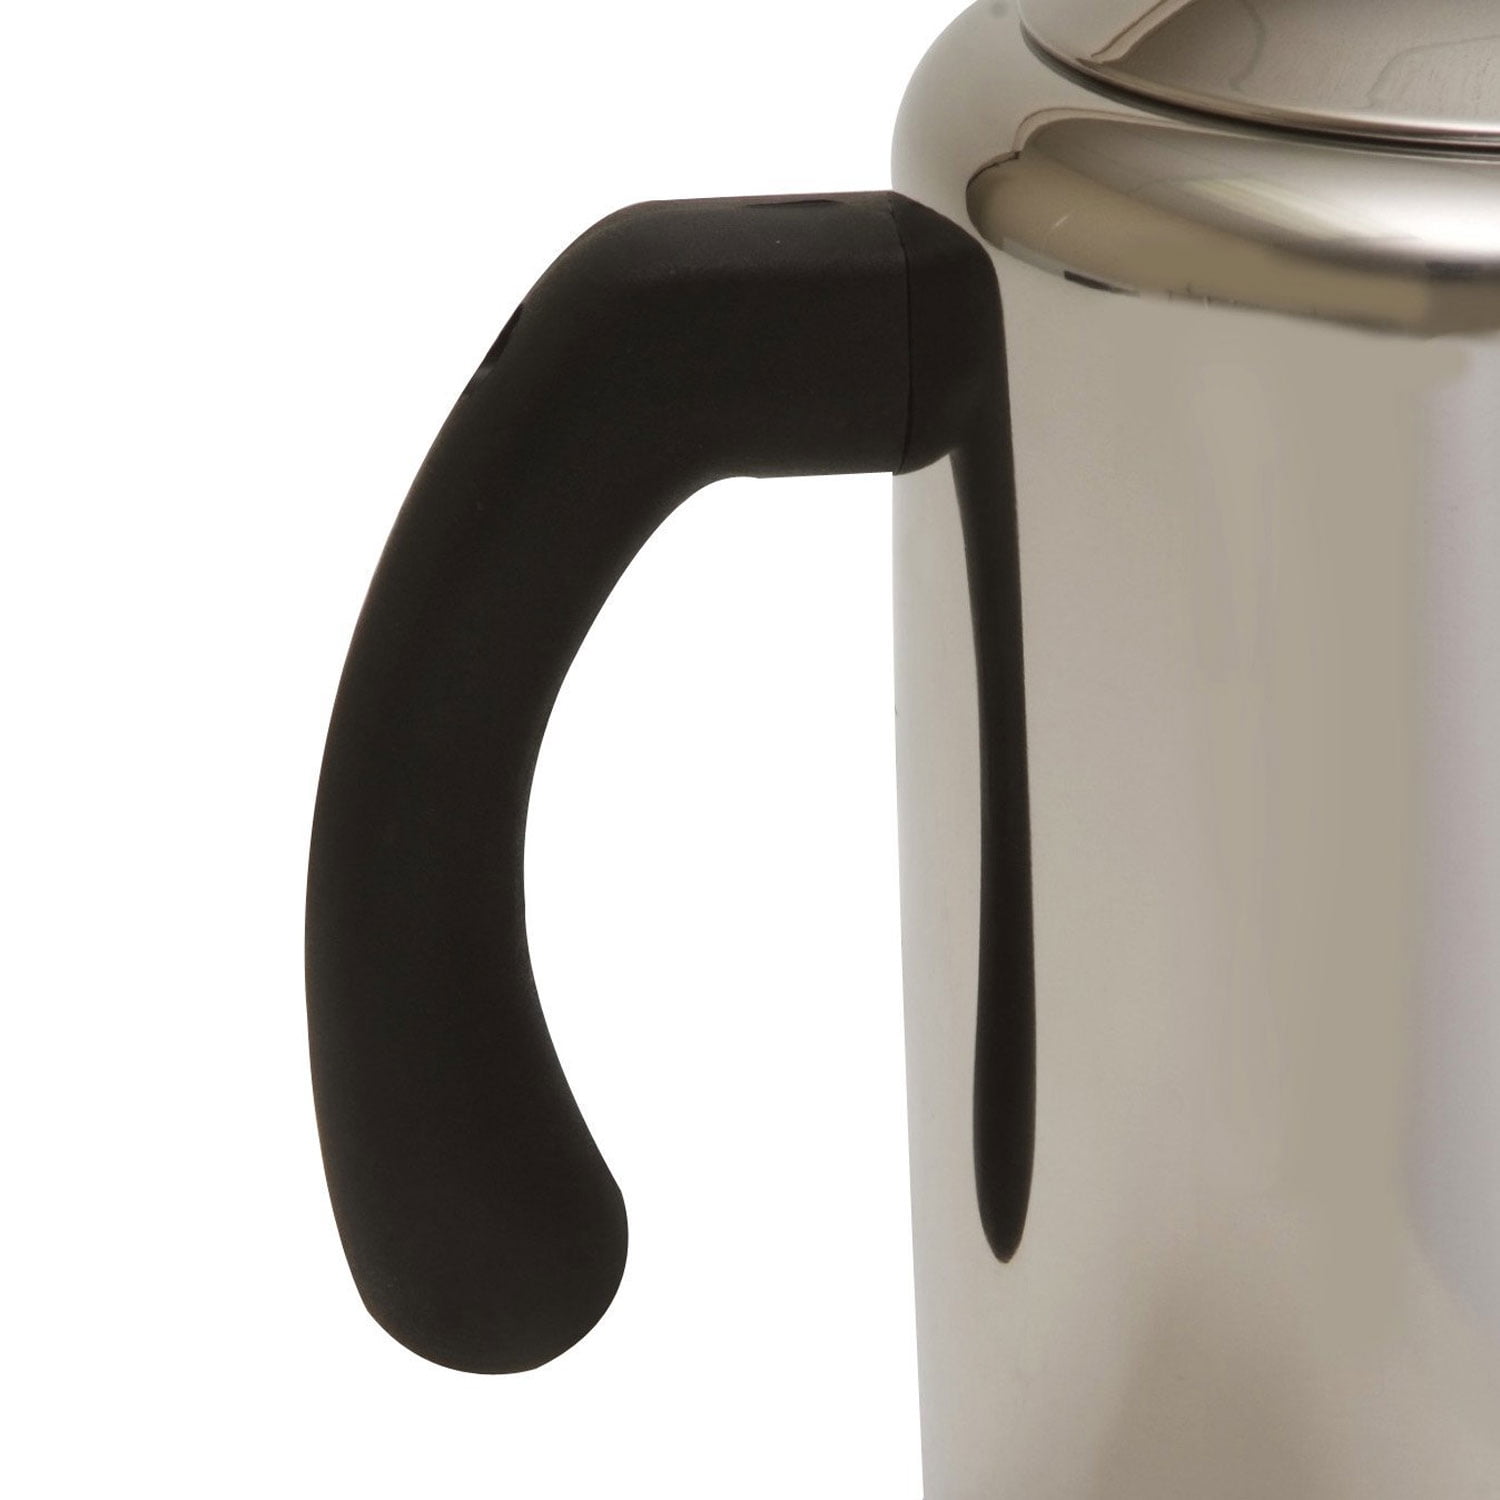 Farberware Stainless Steel 8 Cup Coffee Percolator 